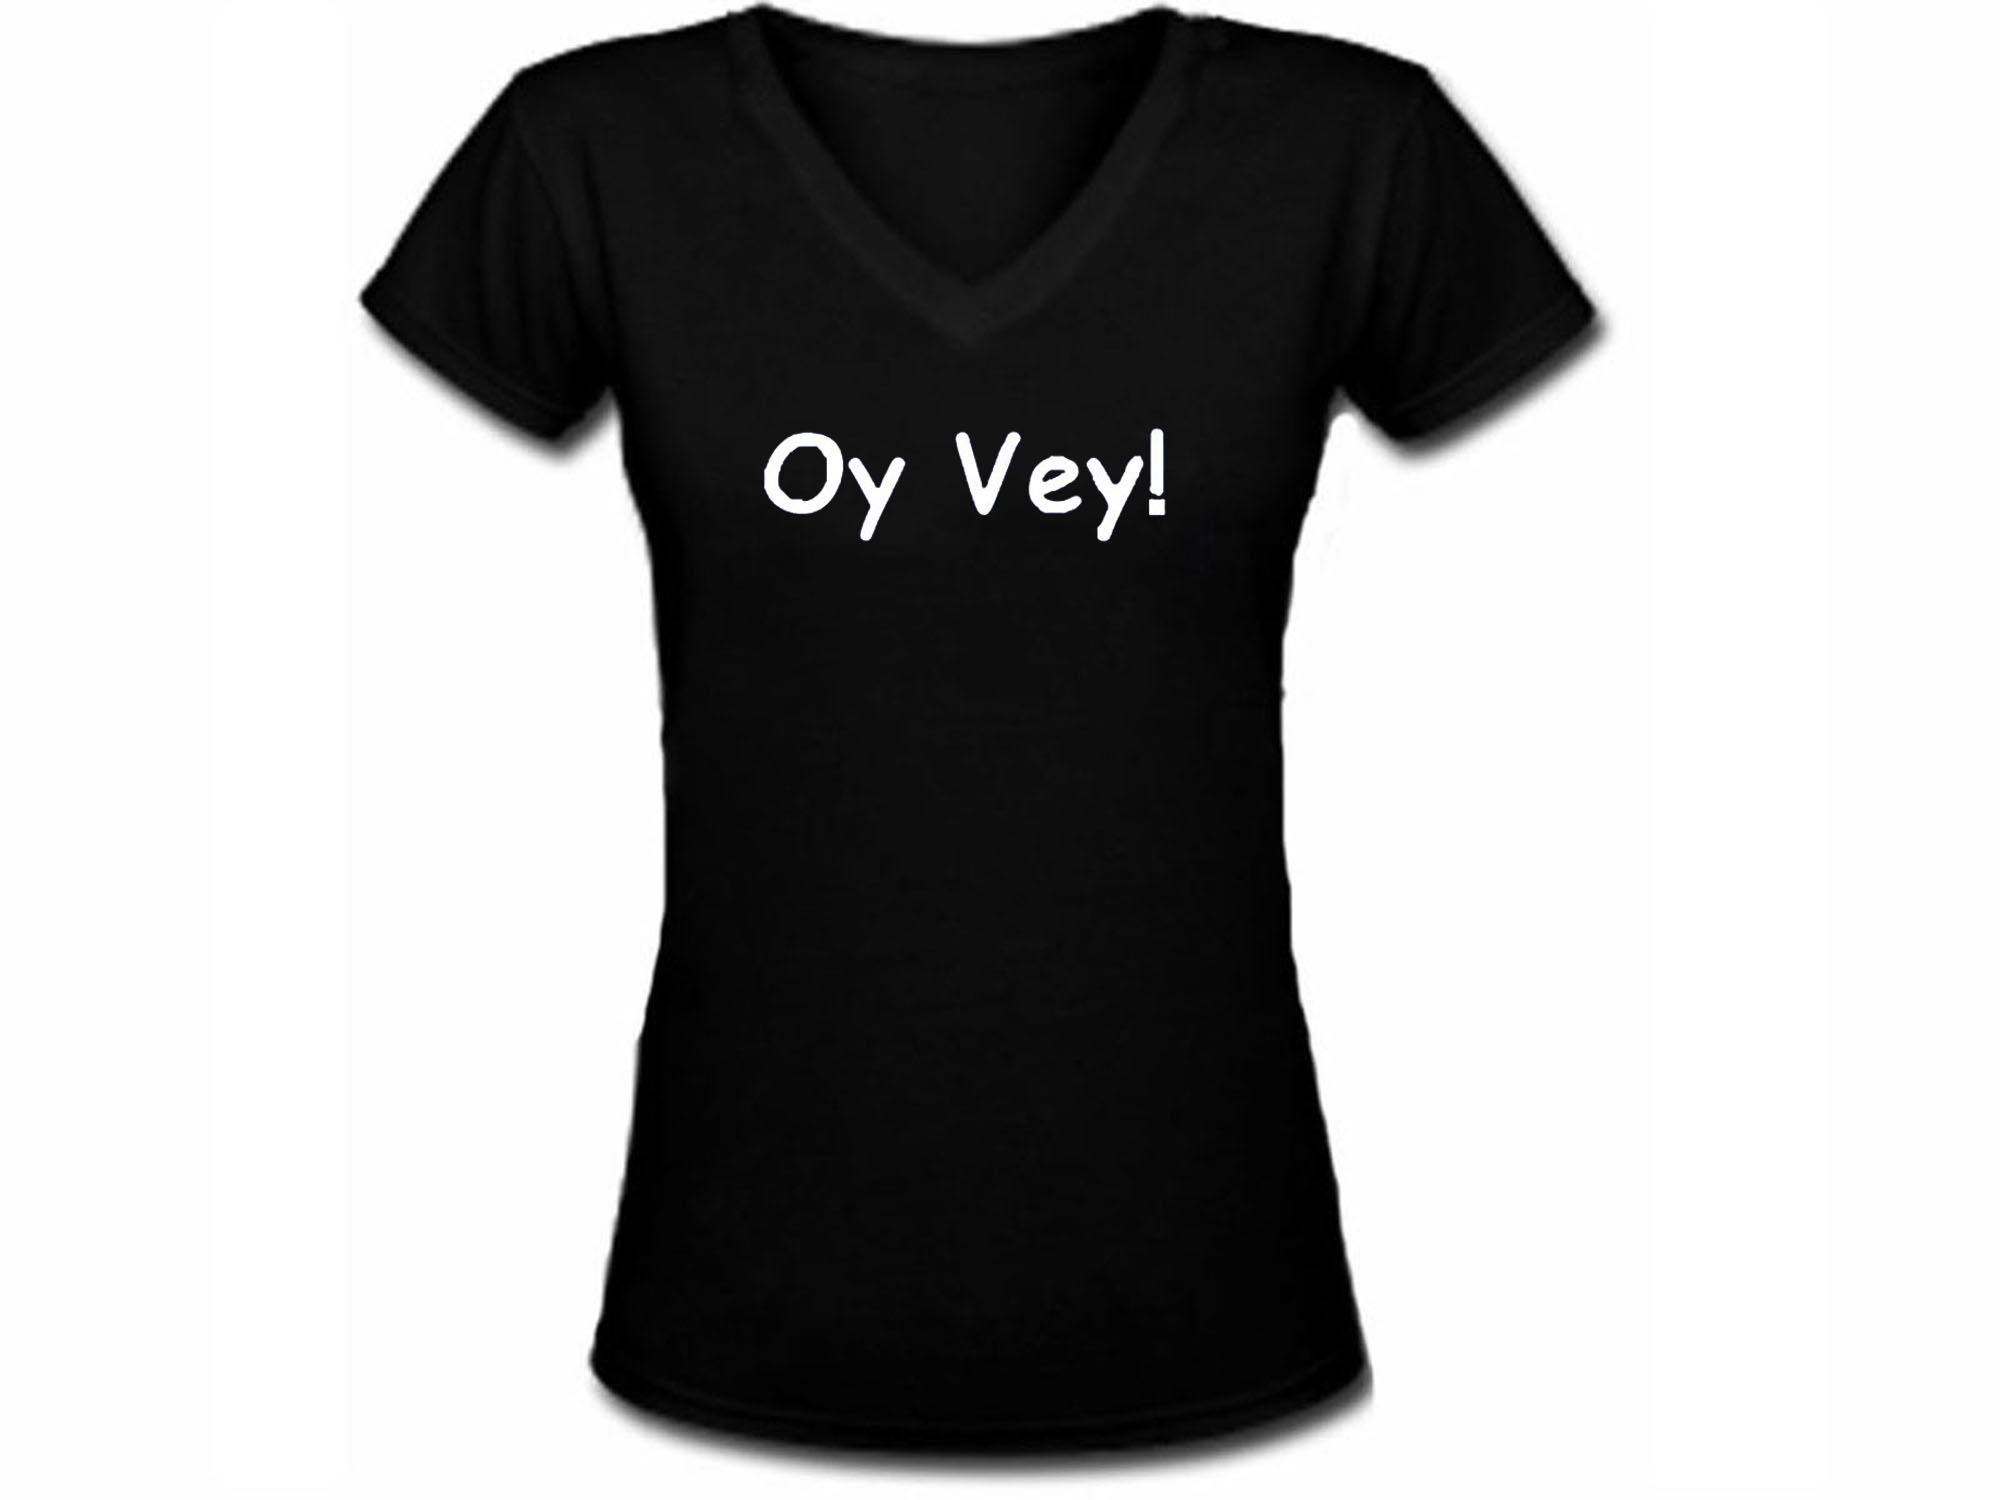 Oy Vey funny Jewish black t-shirt - women/junior